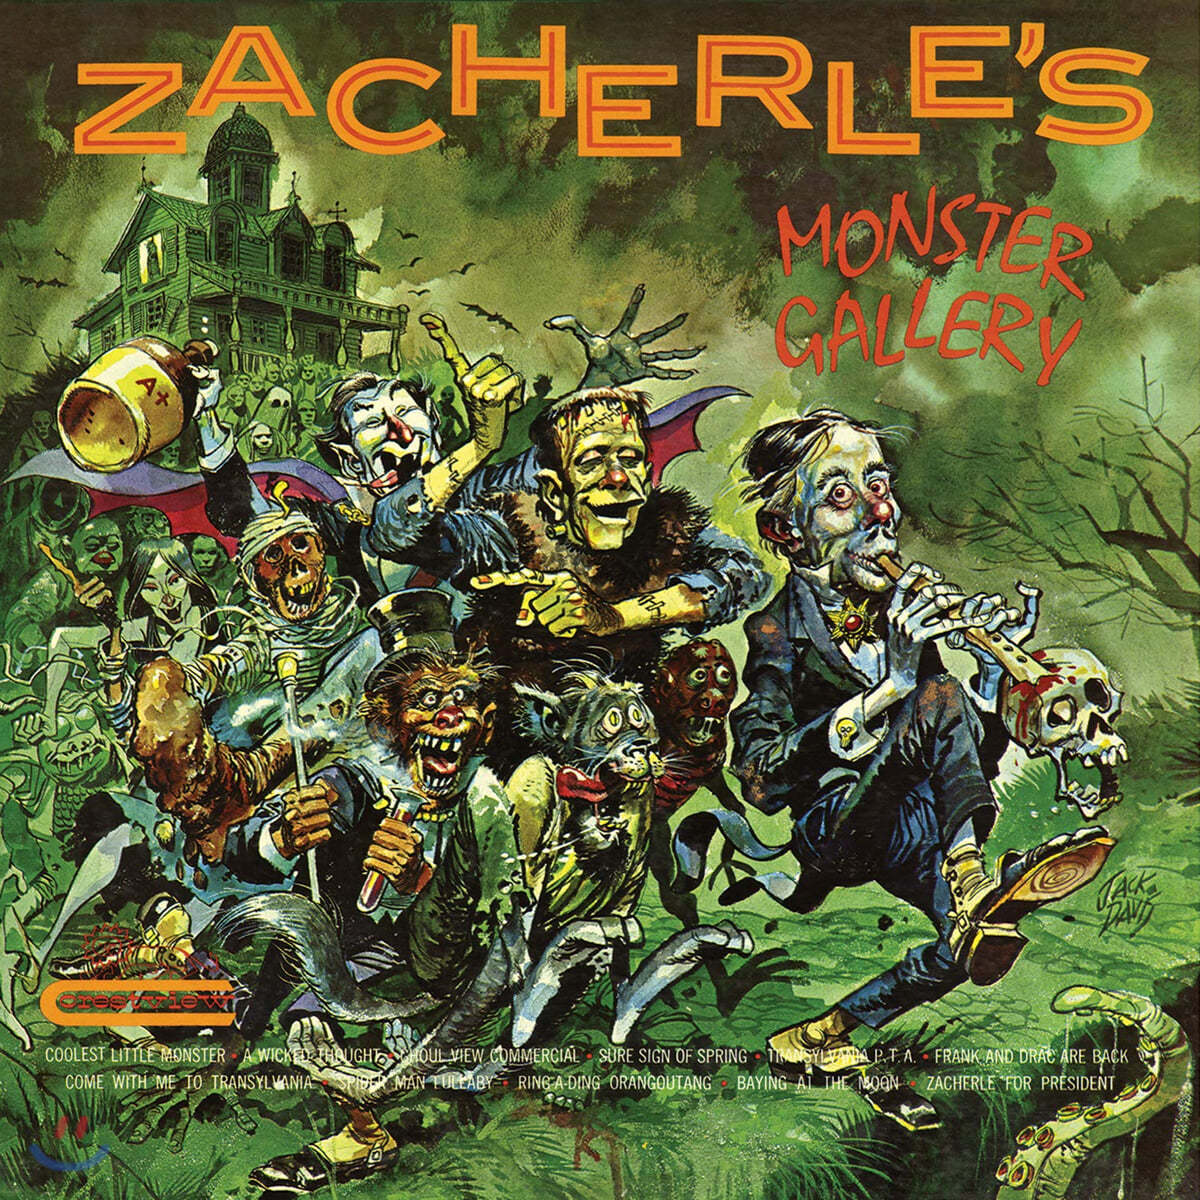 Zacherle (존 재컬리) - Zacherle's Monster Gallery [펌킨 스플래터 컬러 LP]